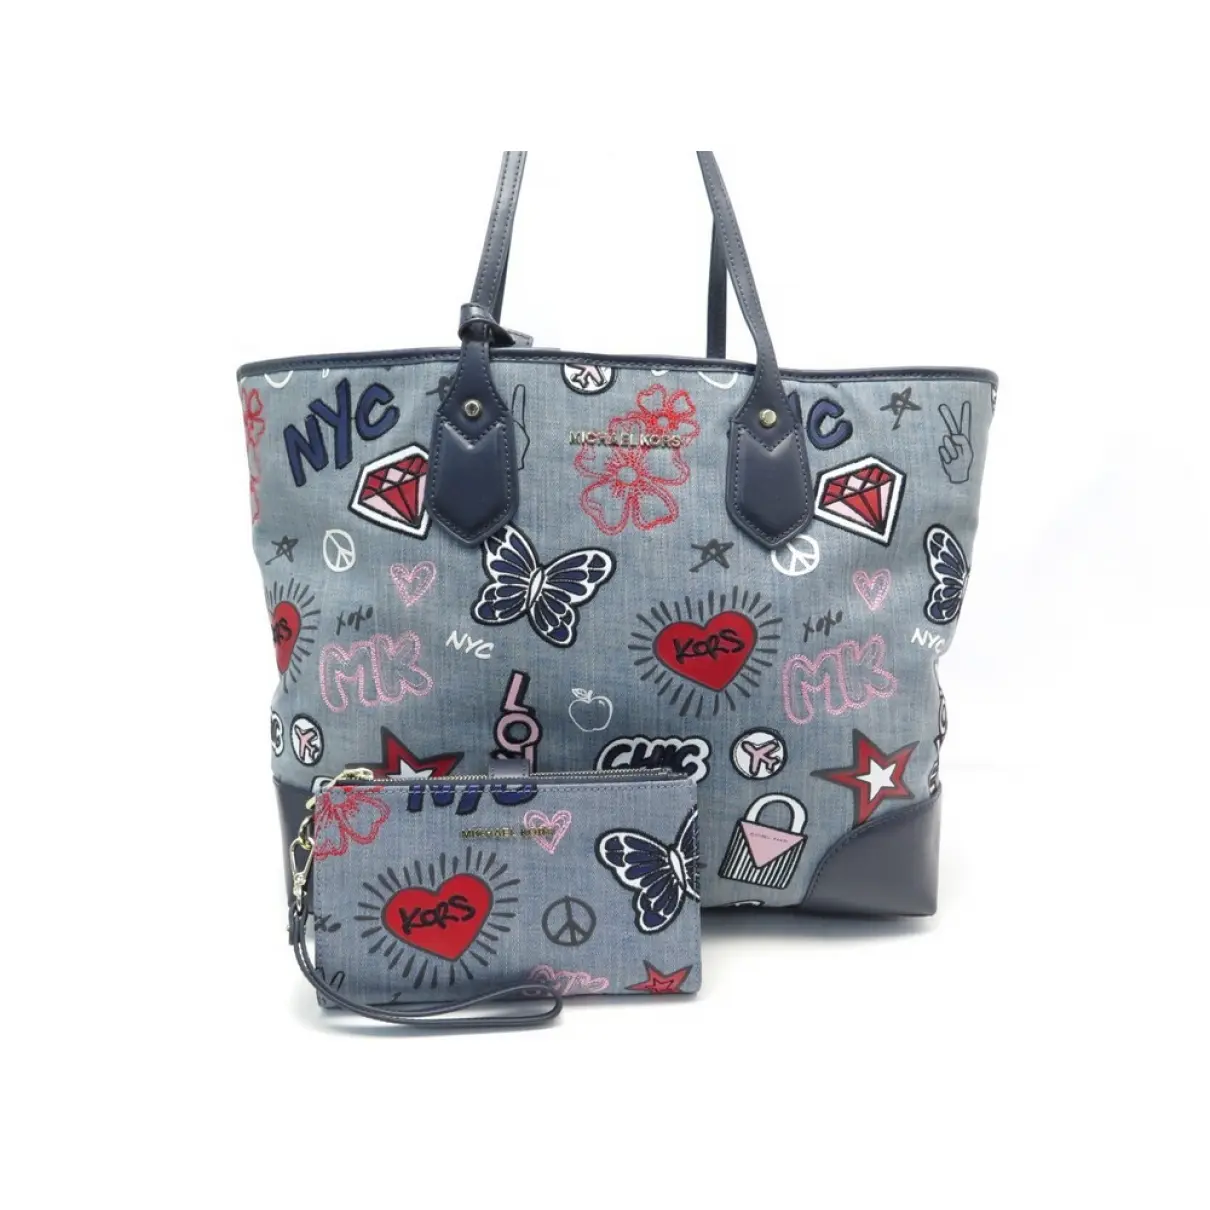 Buy Michael Kors Cloth handbag online